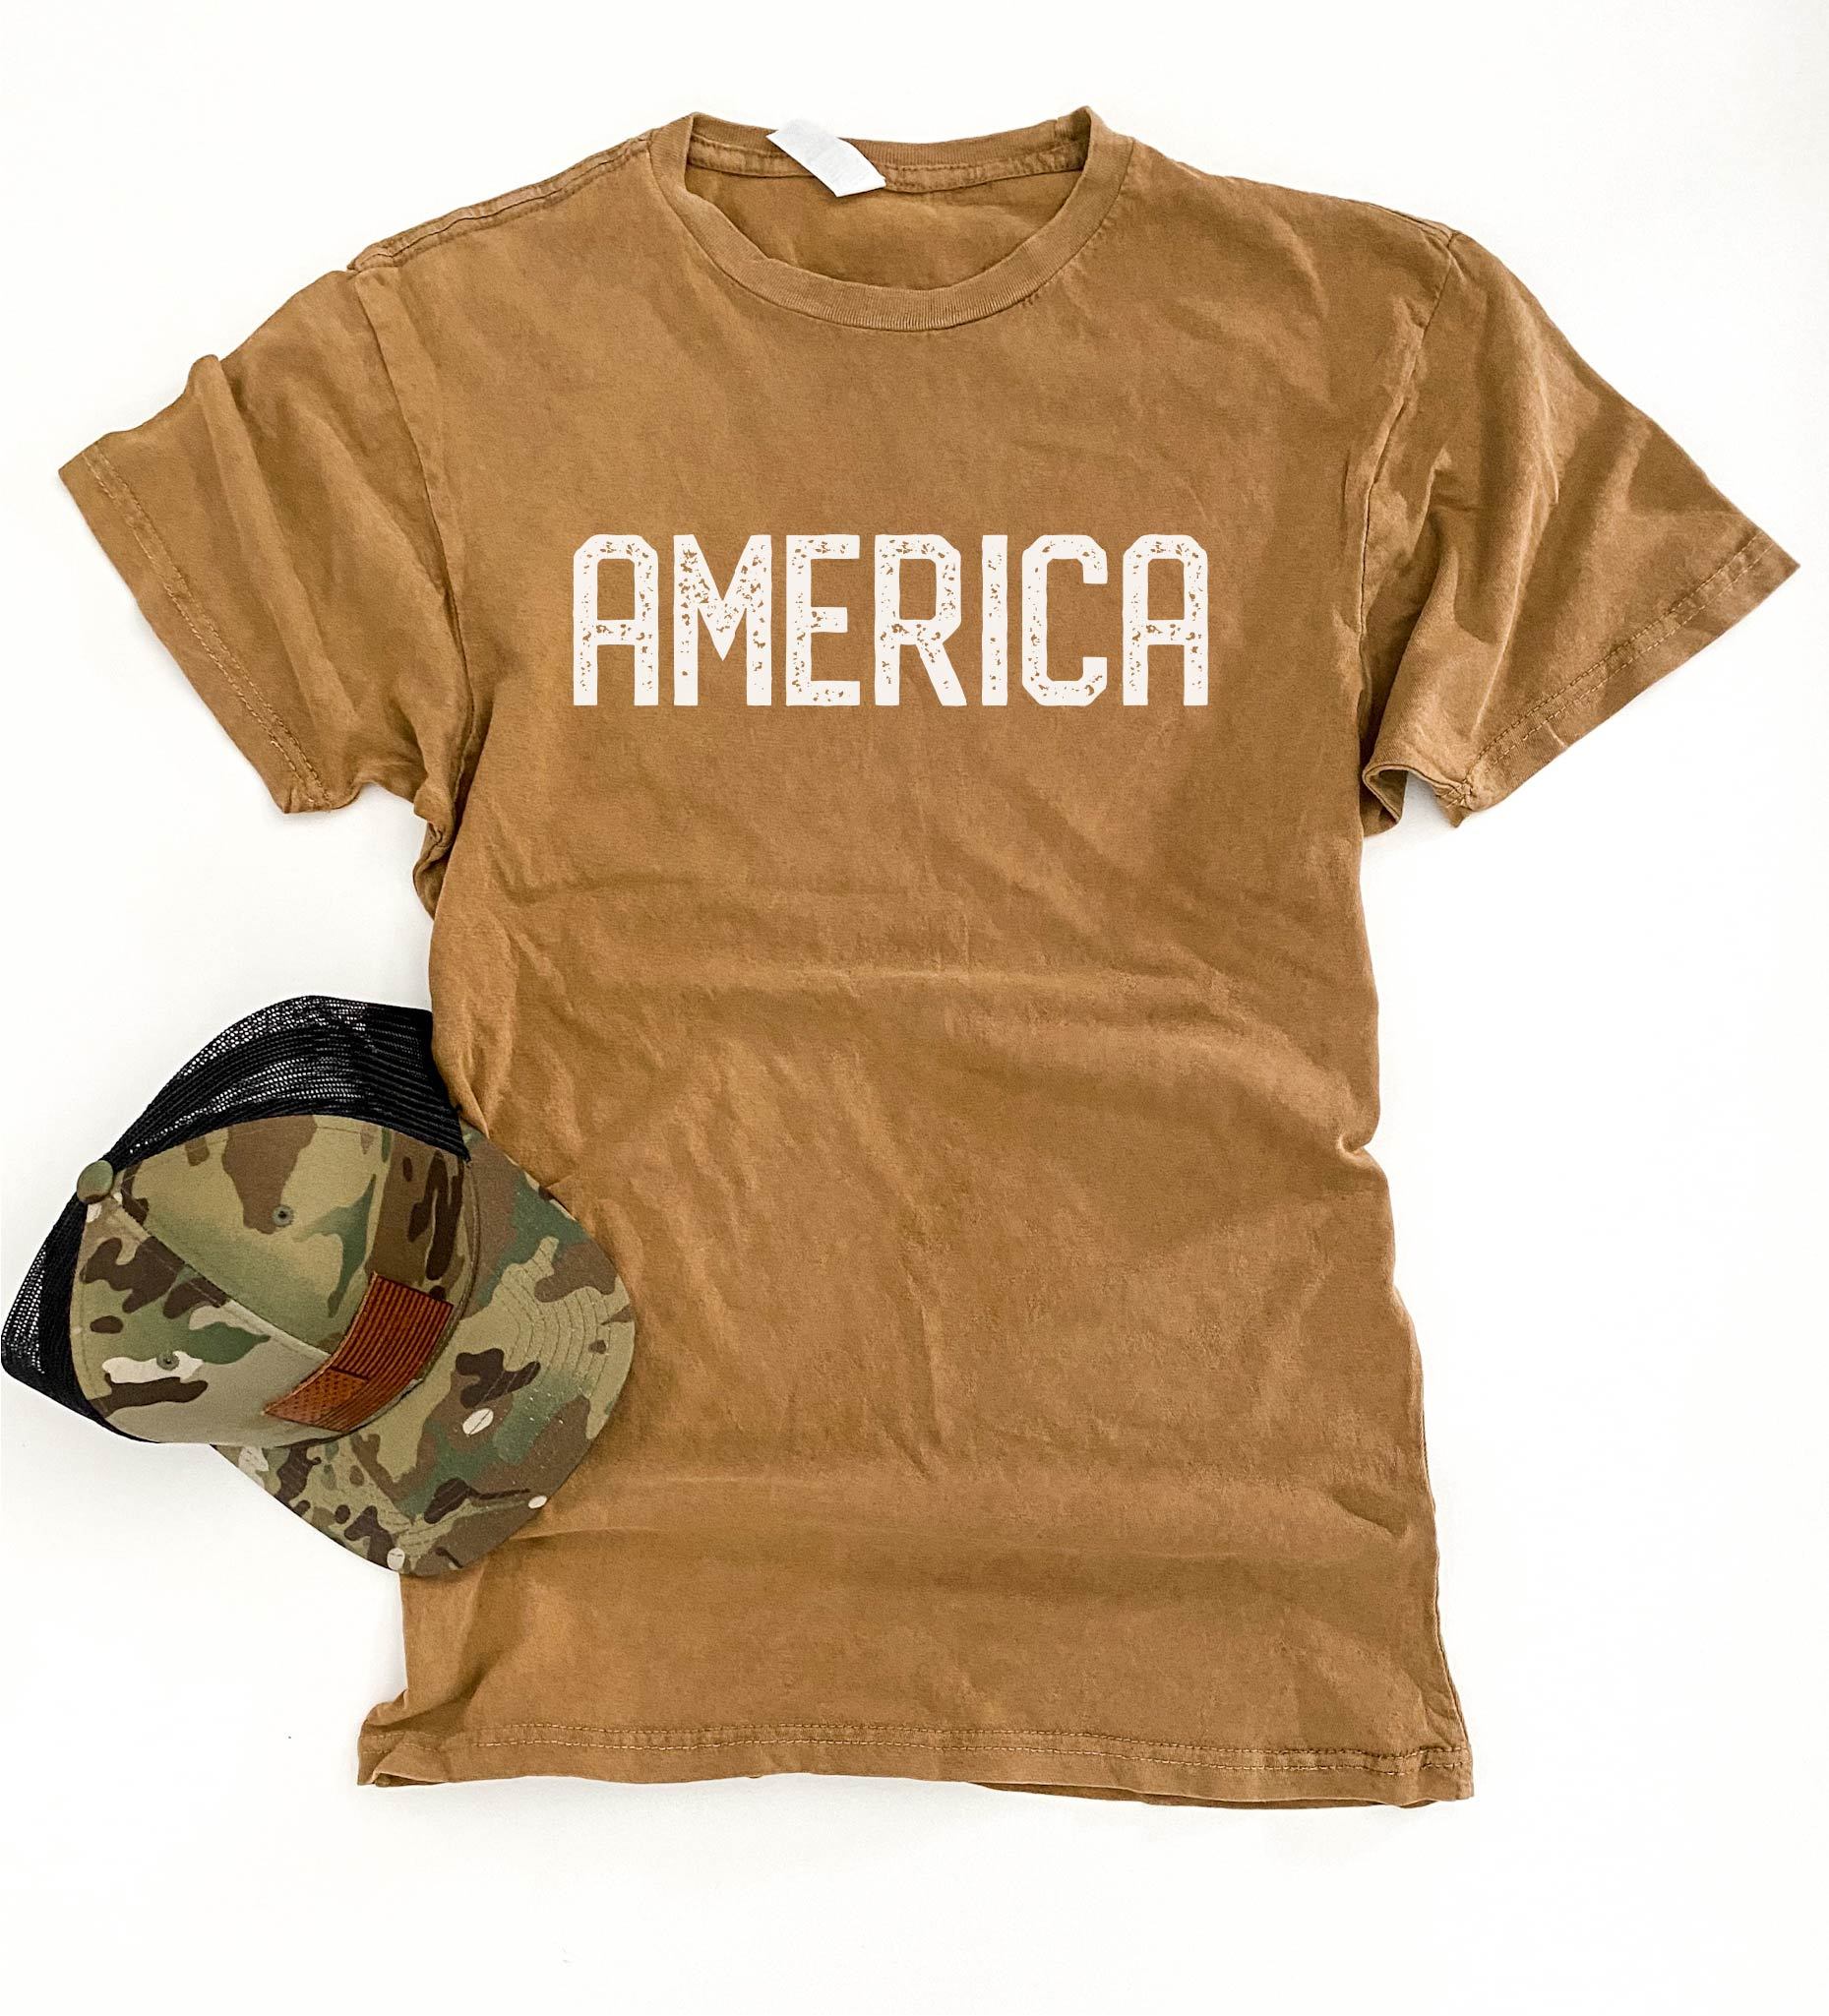 America blockletter vintage wash tee Short sleeve patriotic tee Bella Canvas 3001 